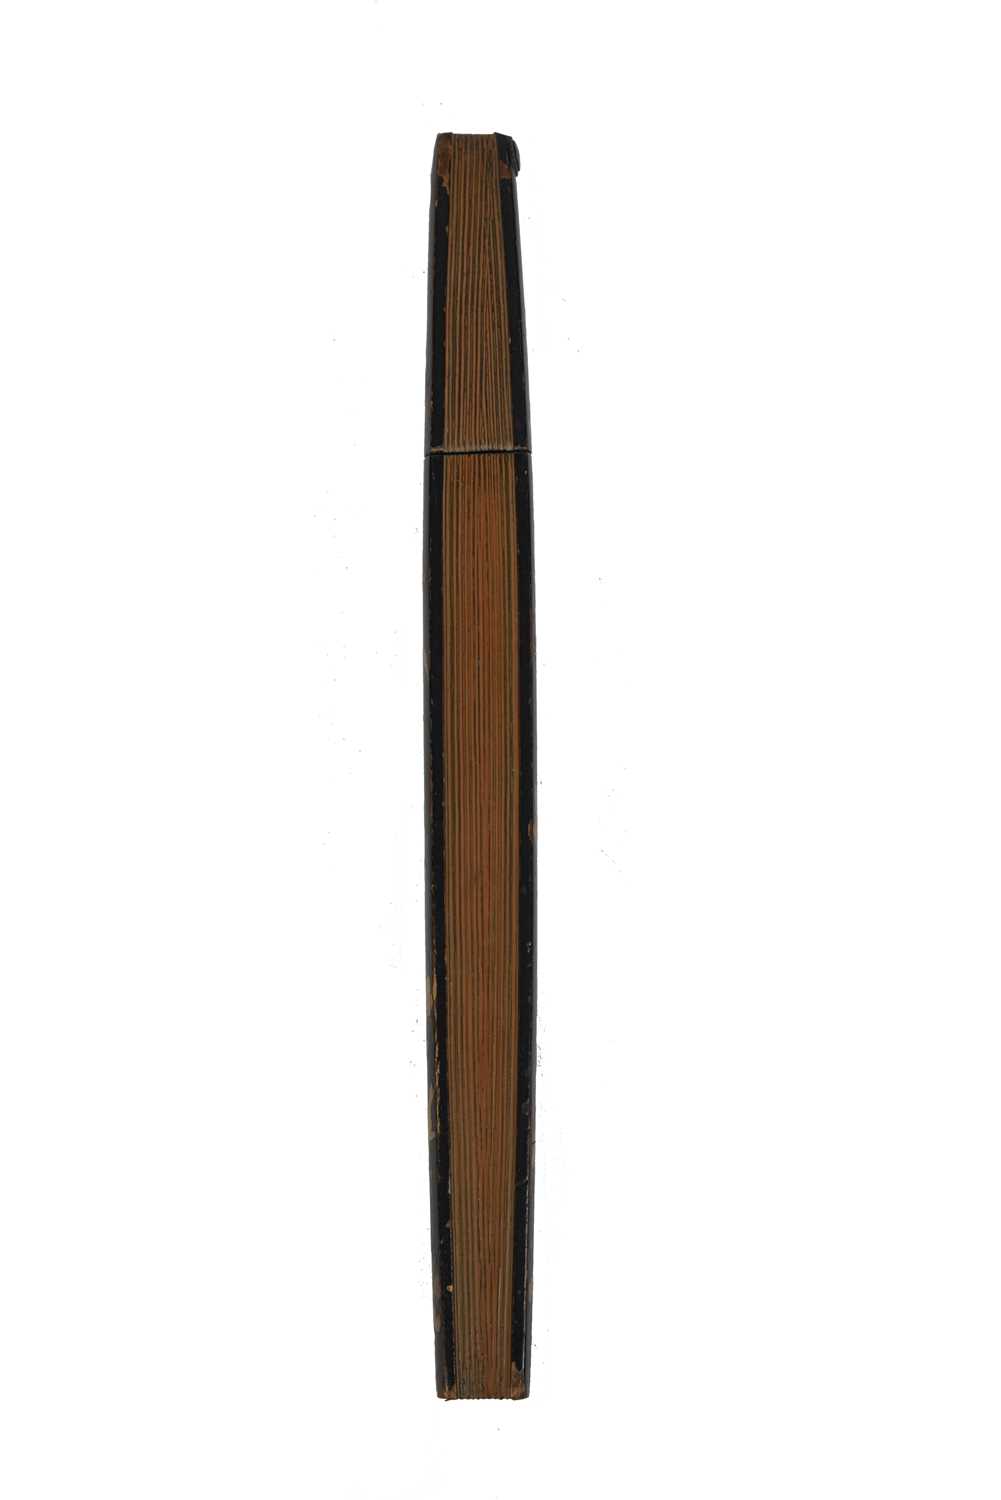 A Japanese dagger modelled as a fan (sento), blade 10.75 in., hira-zukuri, plain copper habaki, - Image 3 of 3